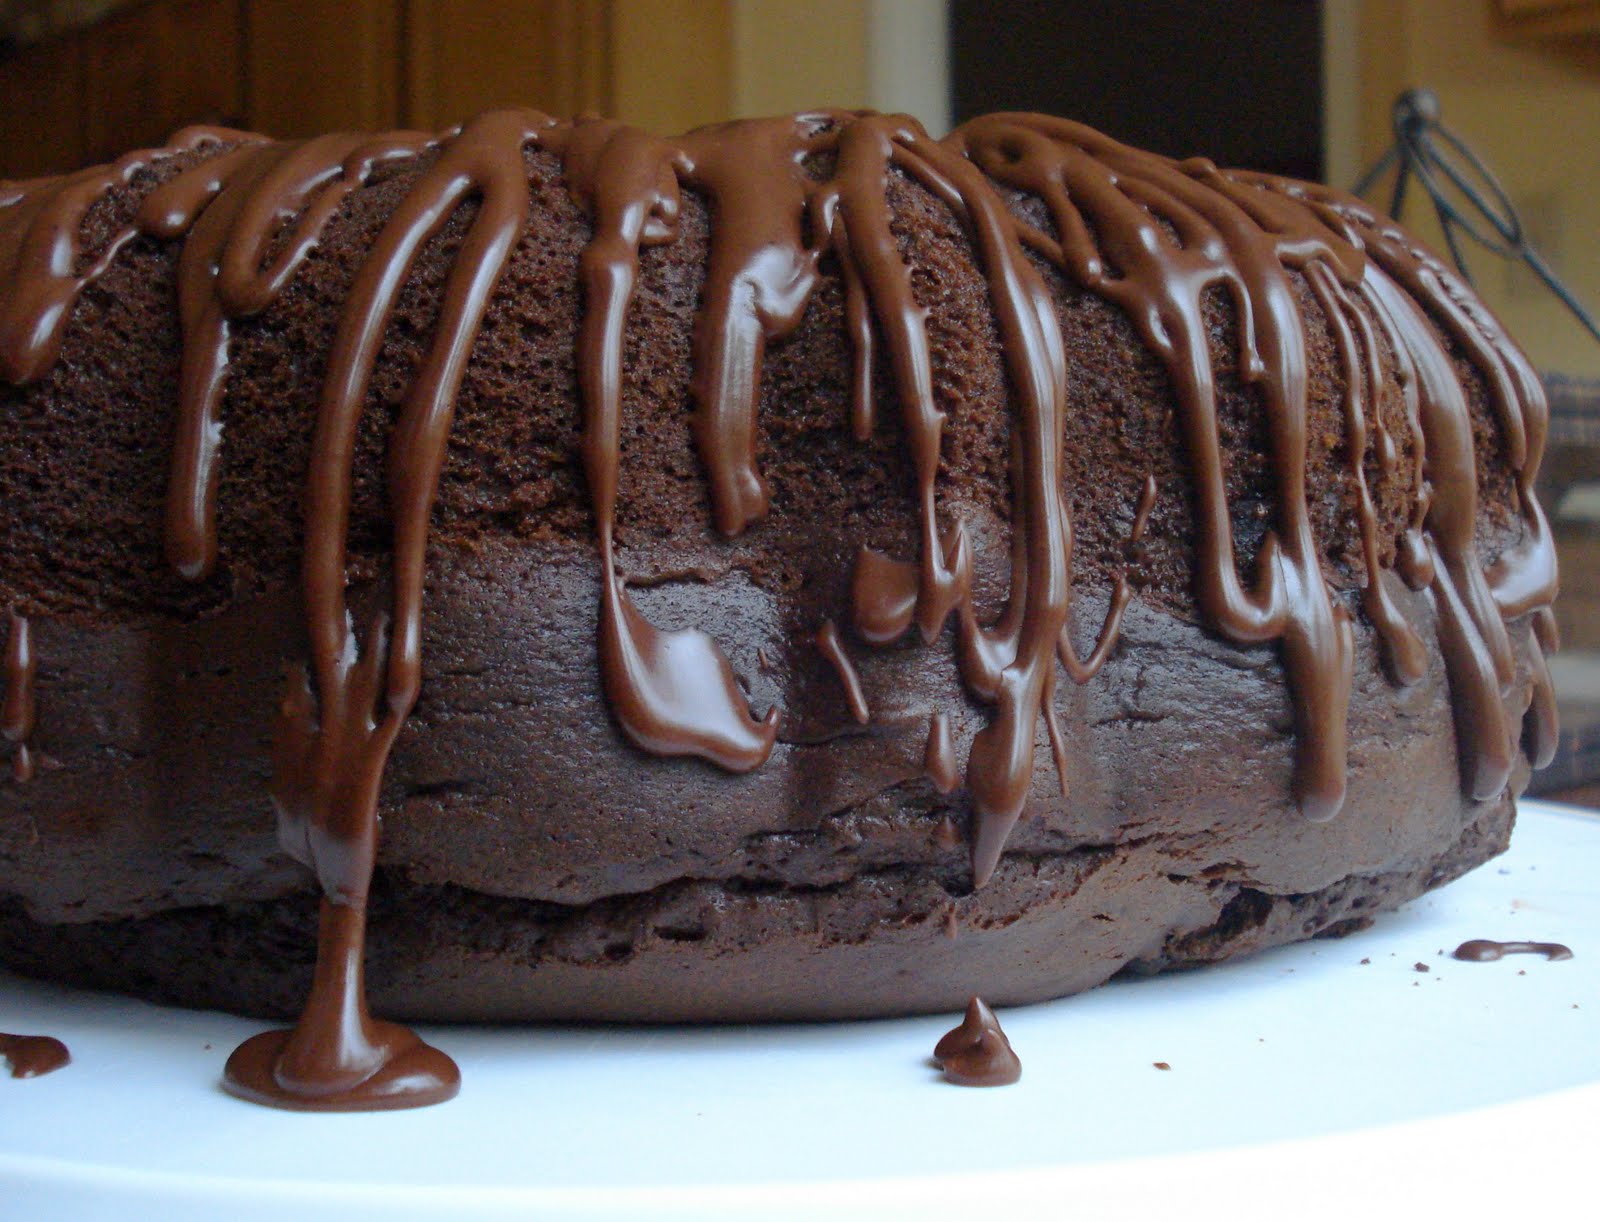 too much chocolate cake